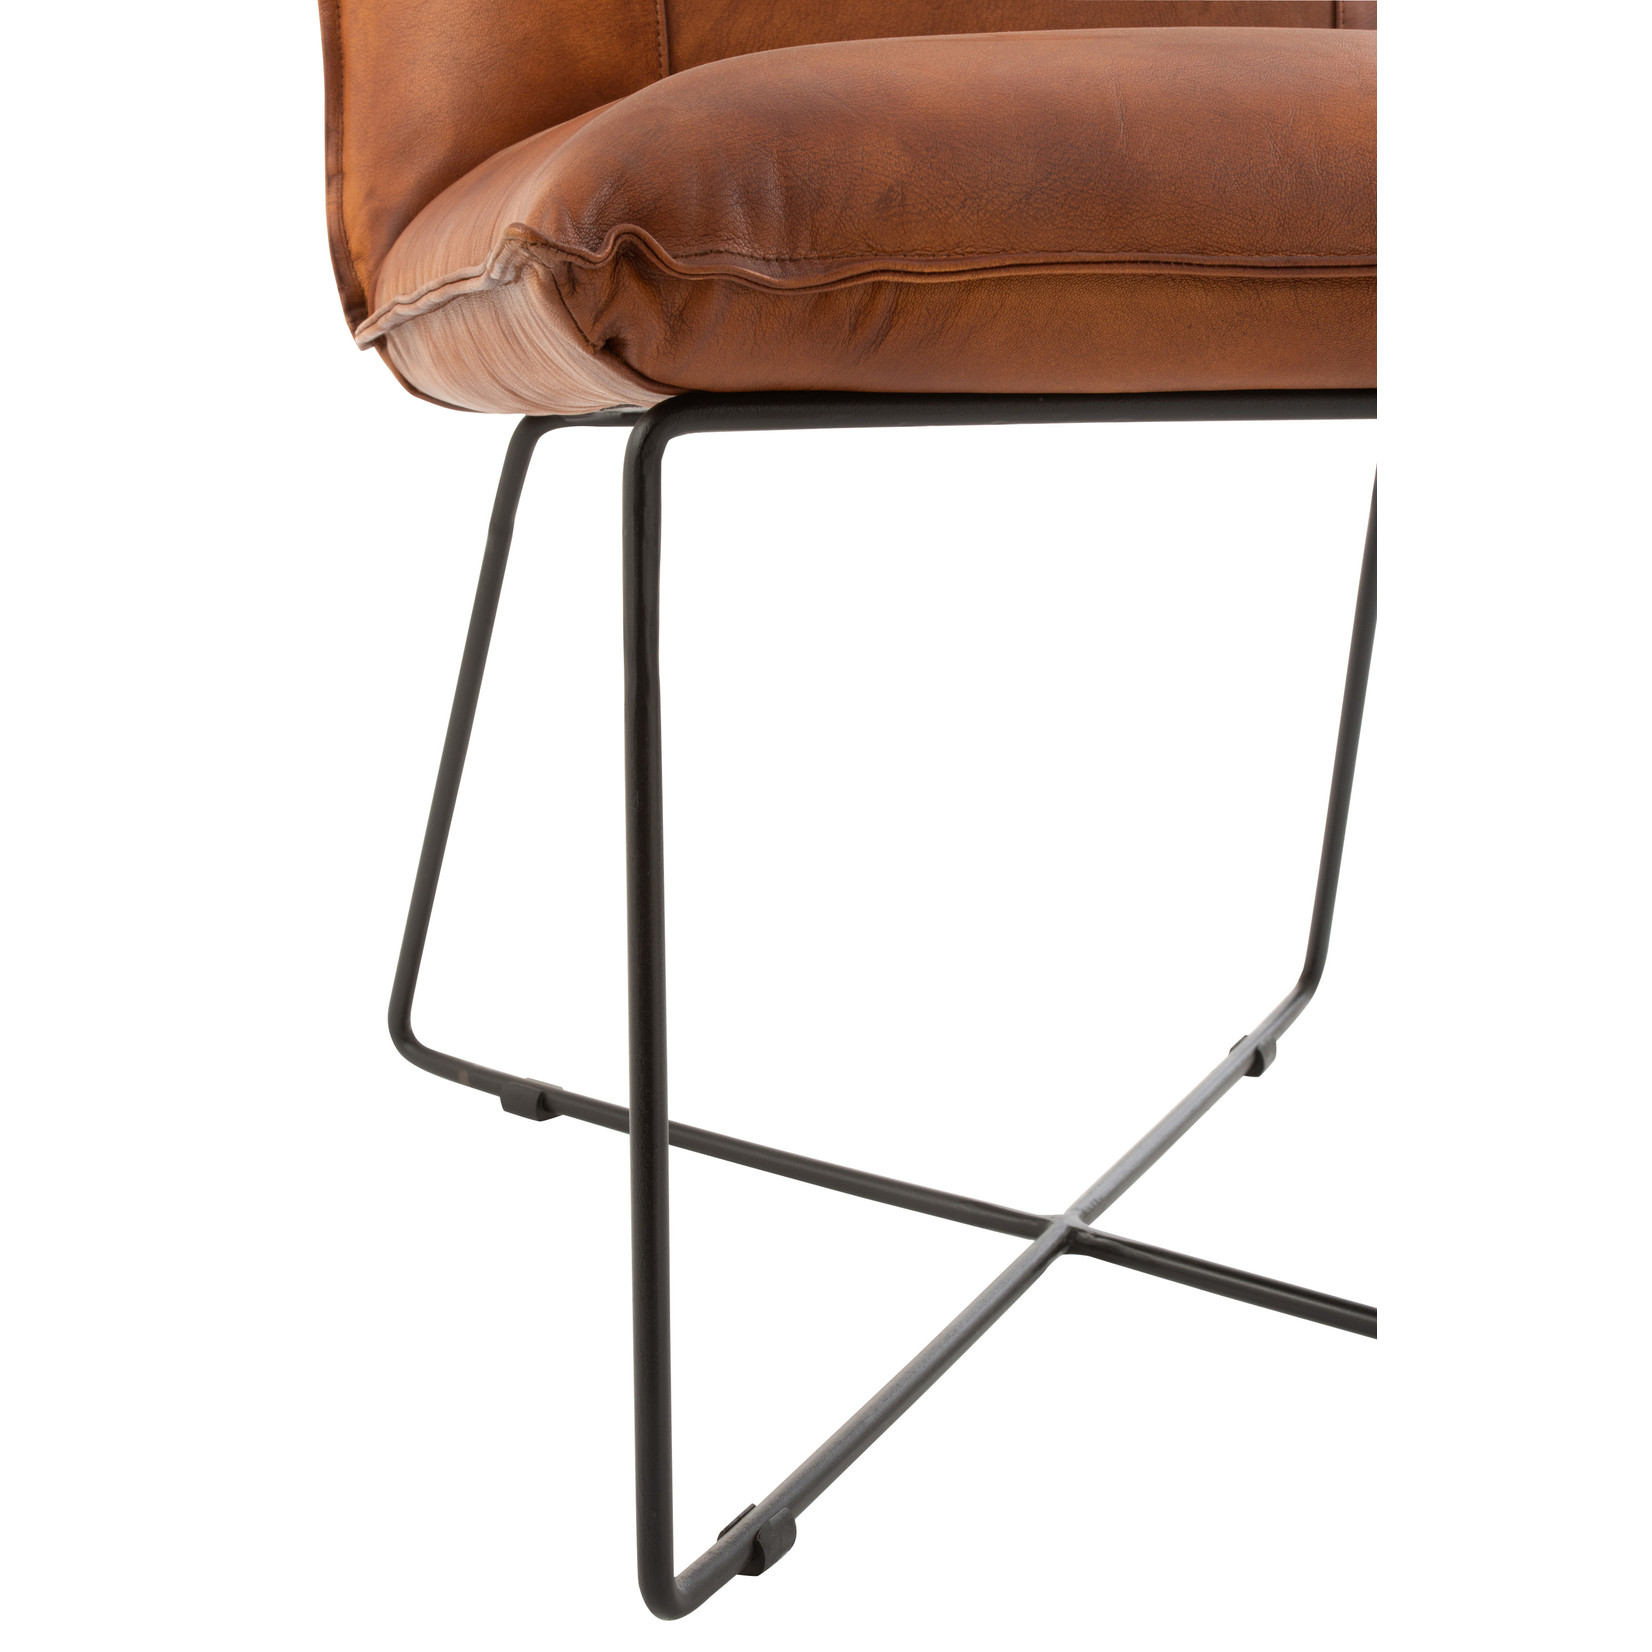 J-Line Dining room chair Leather Metal Legs cross - Cognac